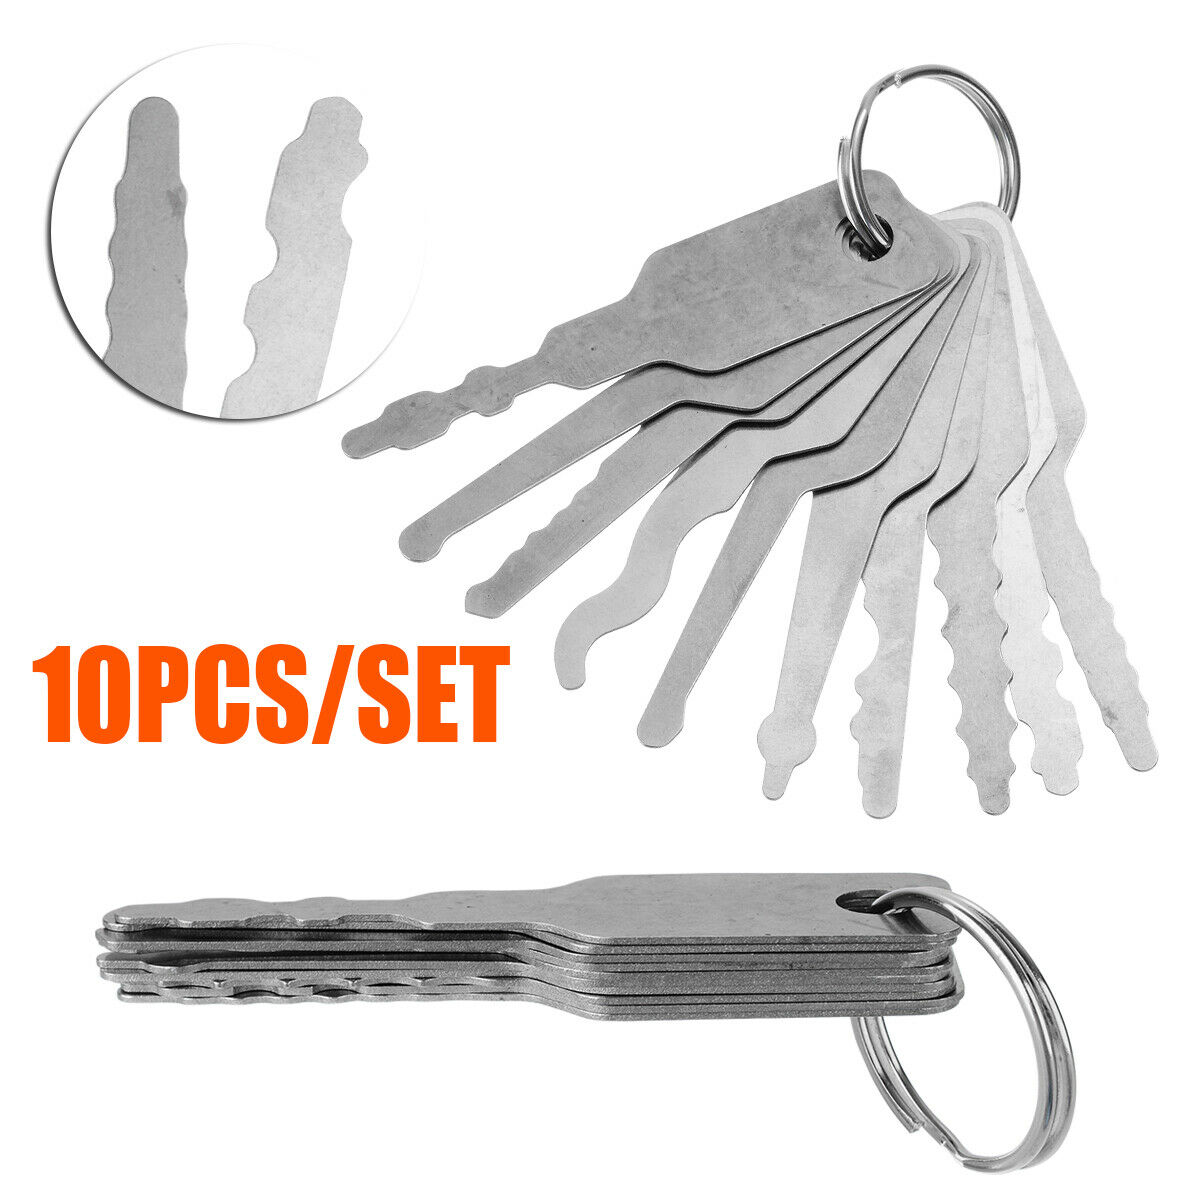 10pcs/set Universal Car Lock Out Emergency Unlock Door Open Keys Tool Kit/